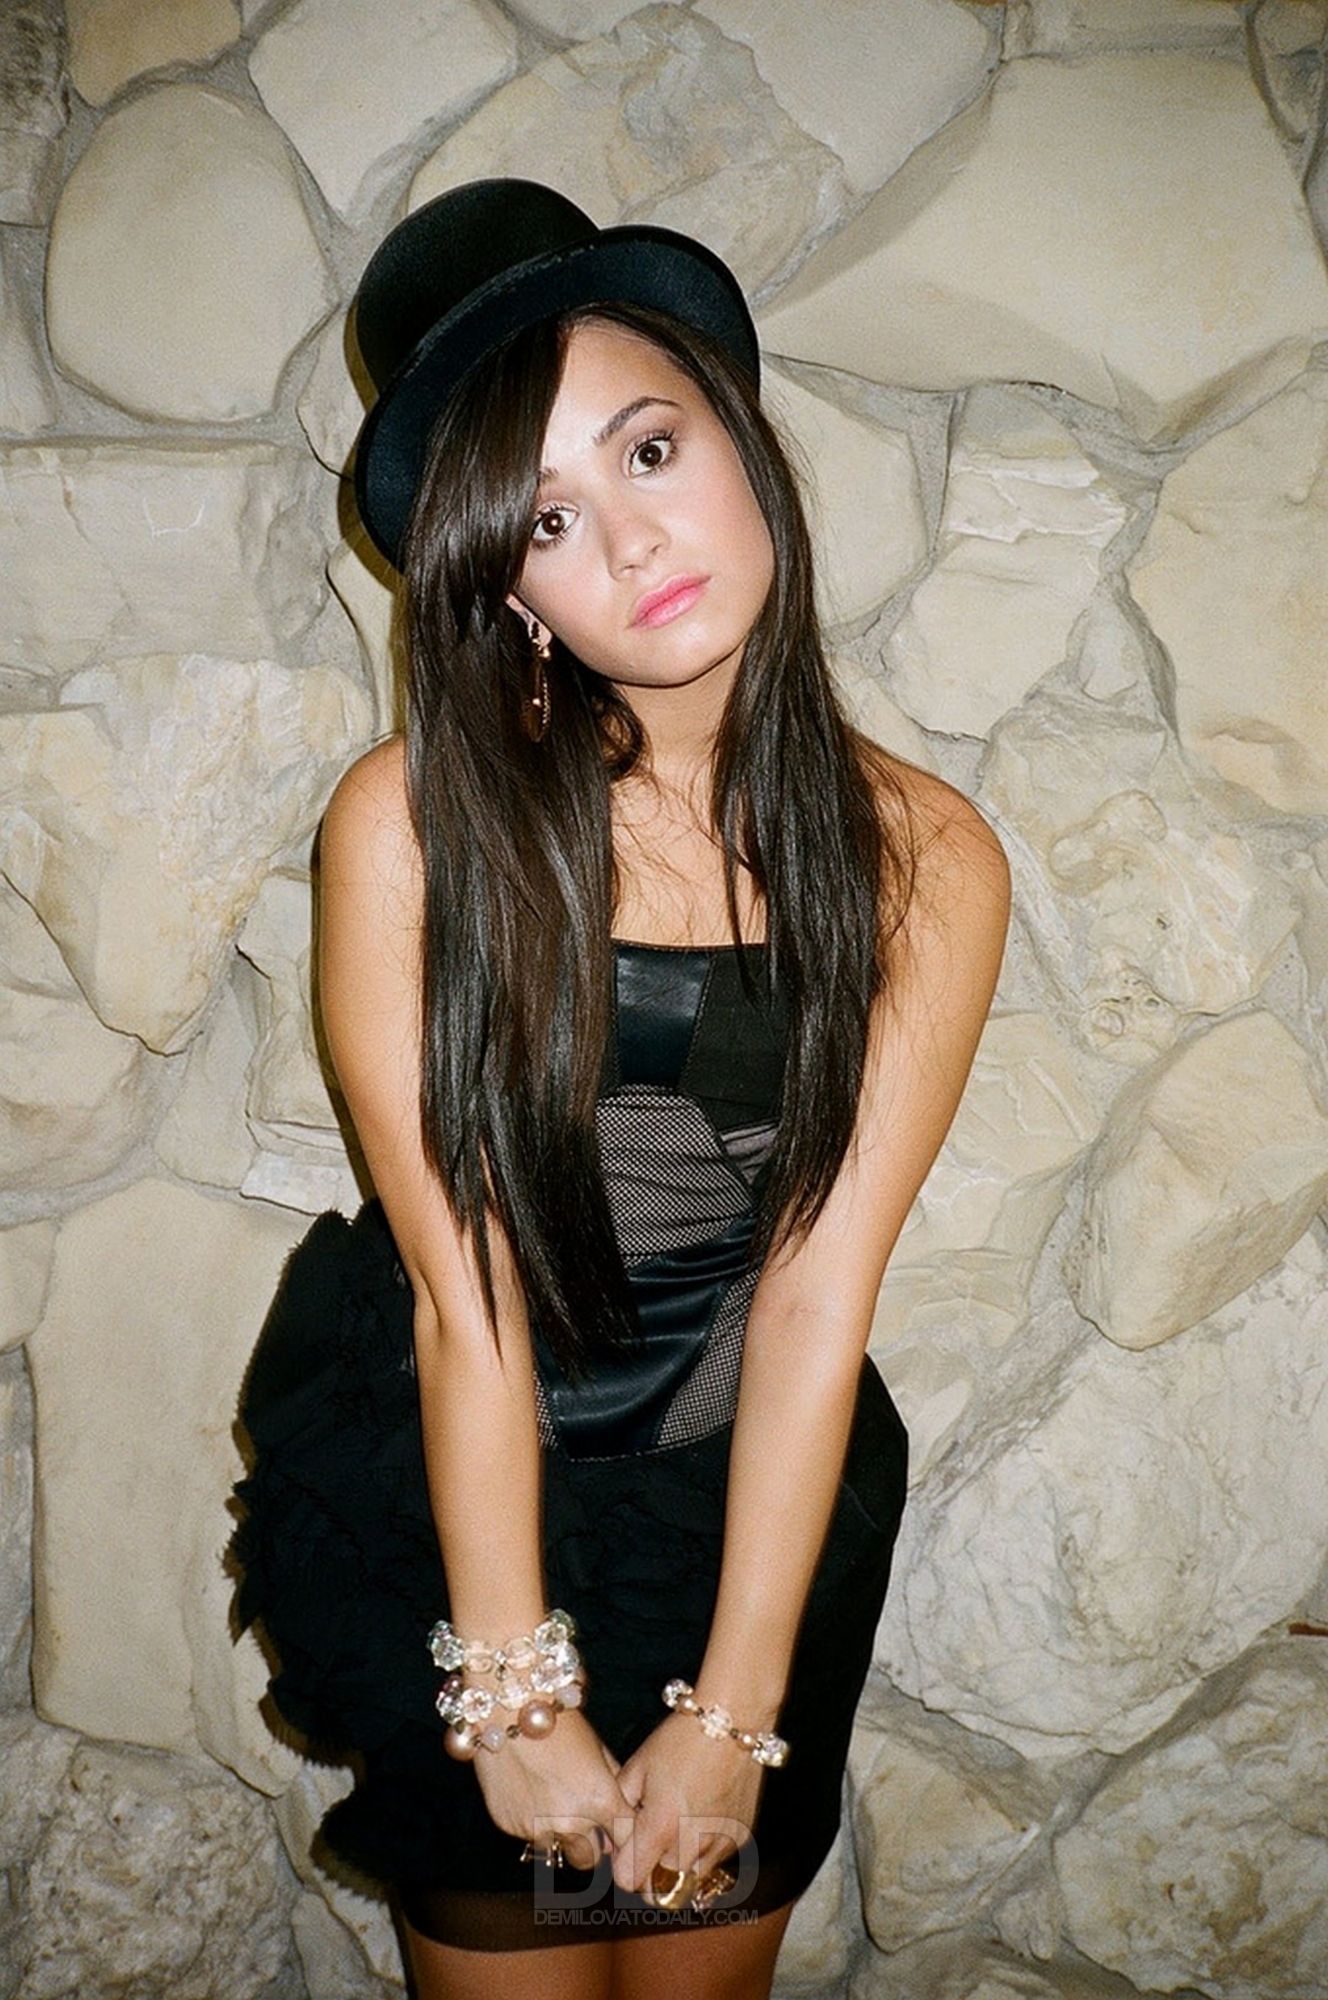 Demi Lovato - A Barrett 2009 for WWD magazine photoshoot - Anichu90 Photo (16795063 ...1328 x 2000